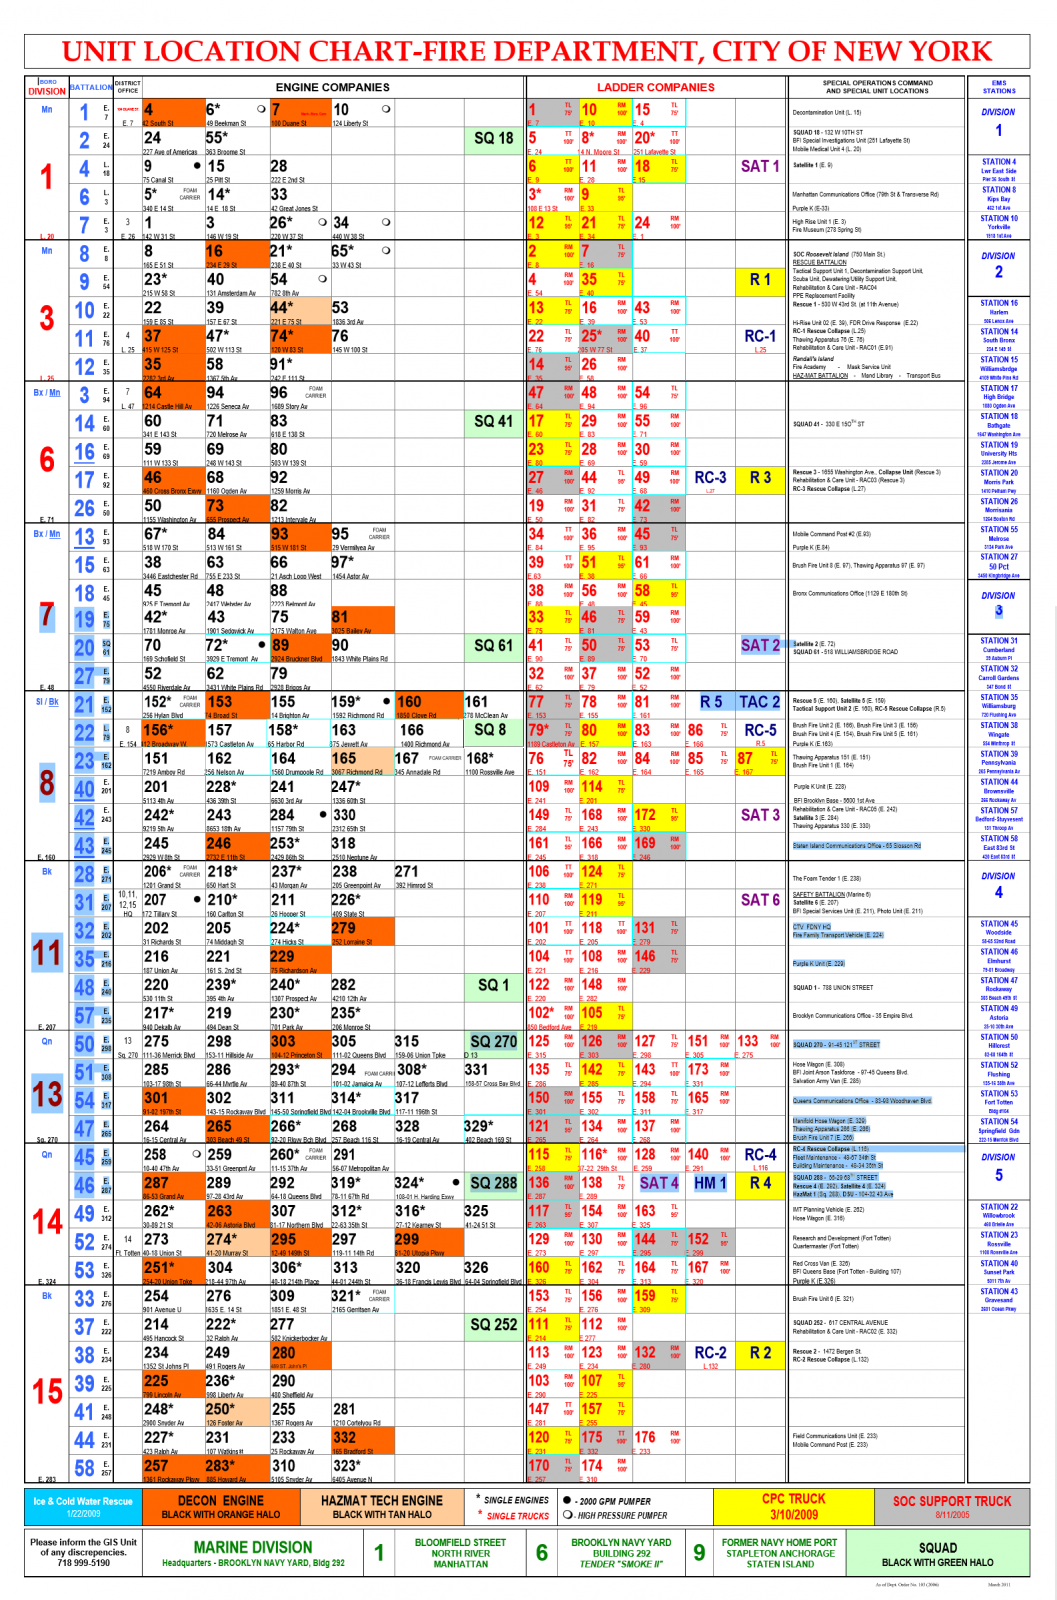 Unit Location Chart 2011.png